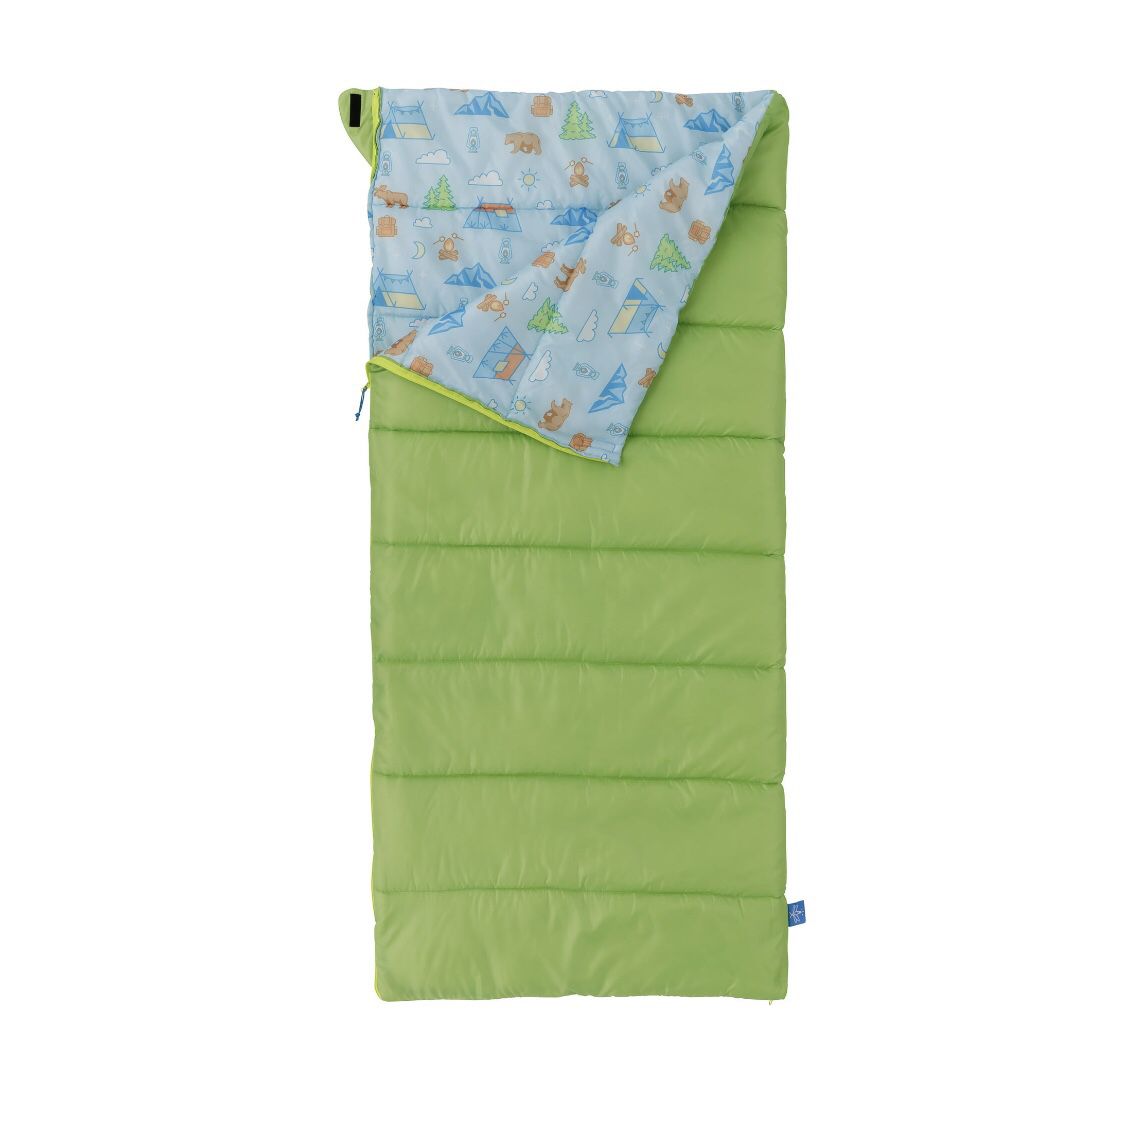 Firefly! Outdoor Gear Youth Sleeping Bag - Green/Blue